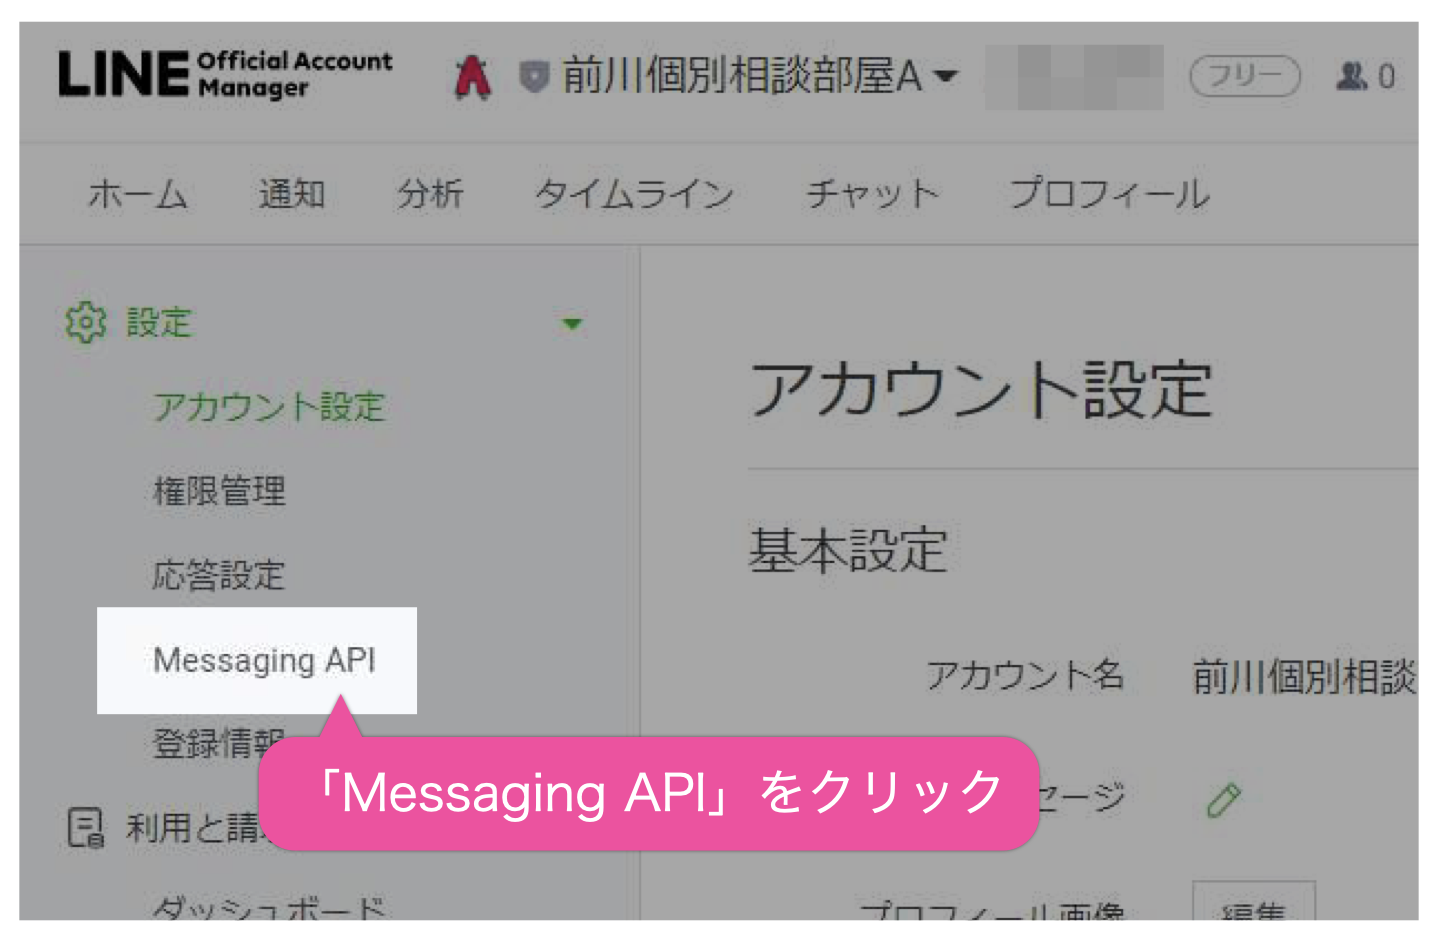 「Messaging API」メニューをクリック